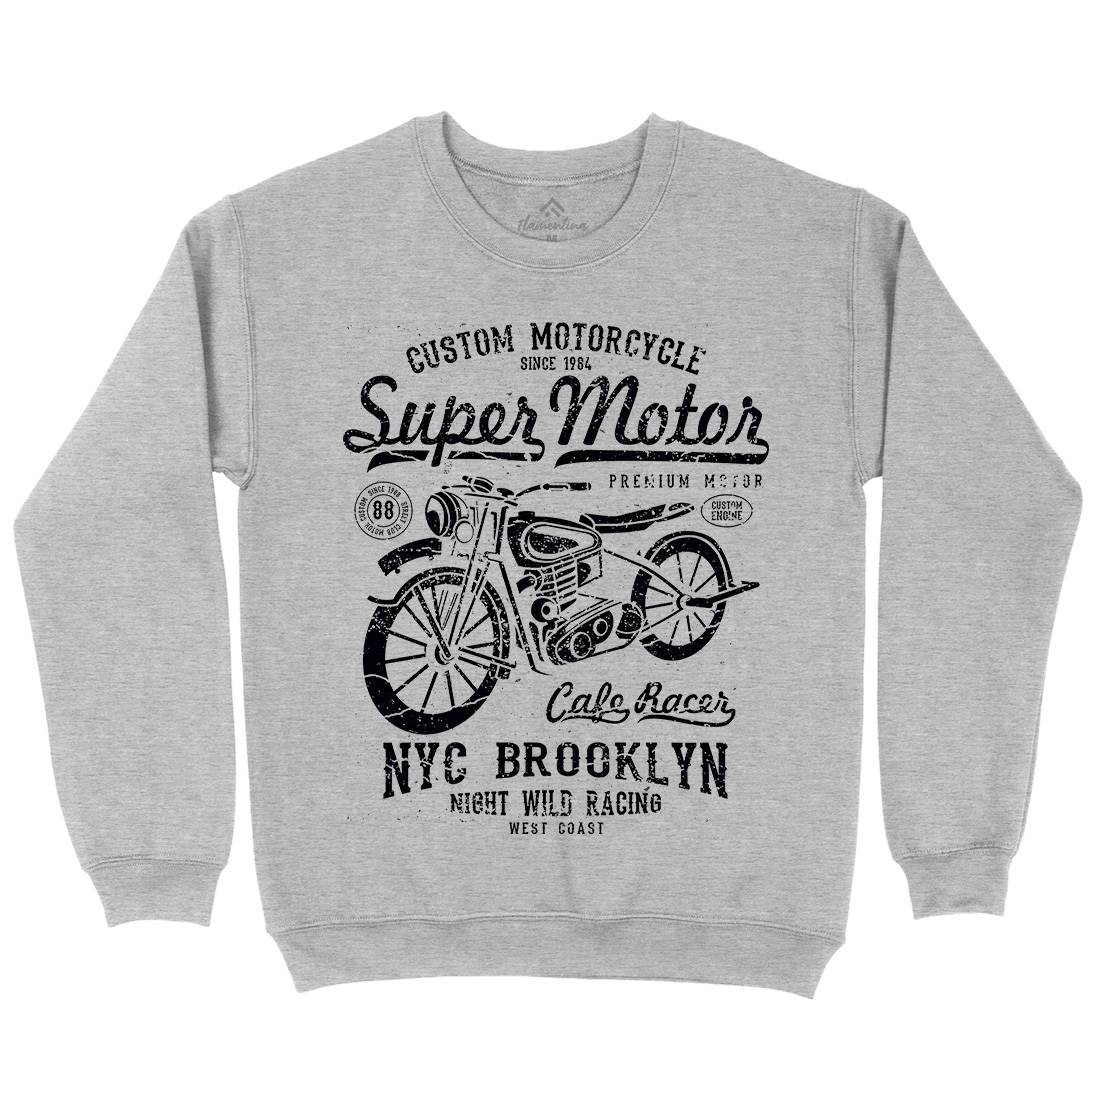 Super Motor Mens Crew Neck Sweatshirt Motorcycles A166